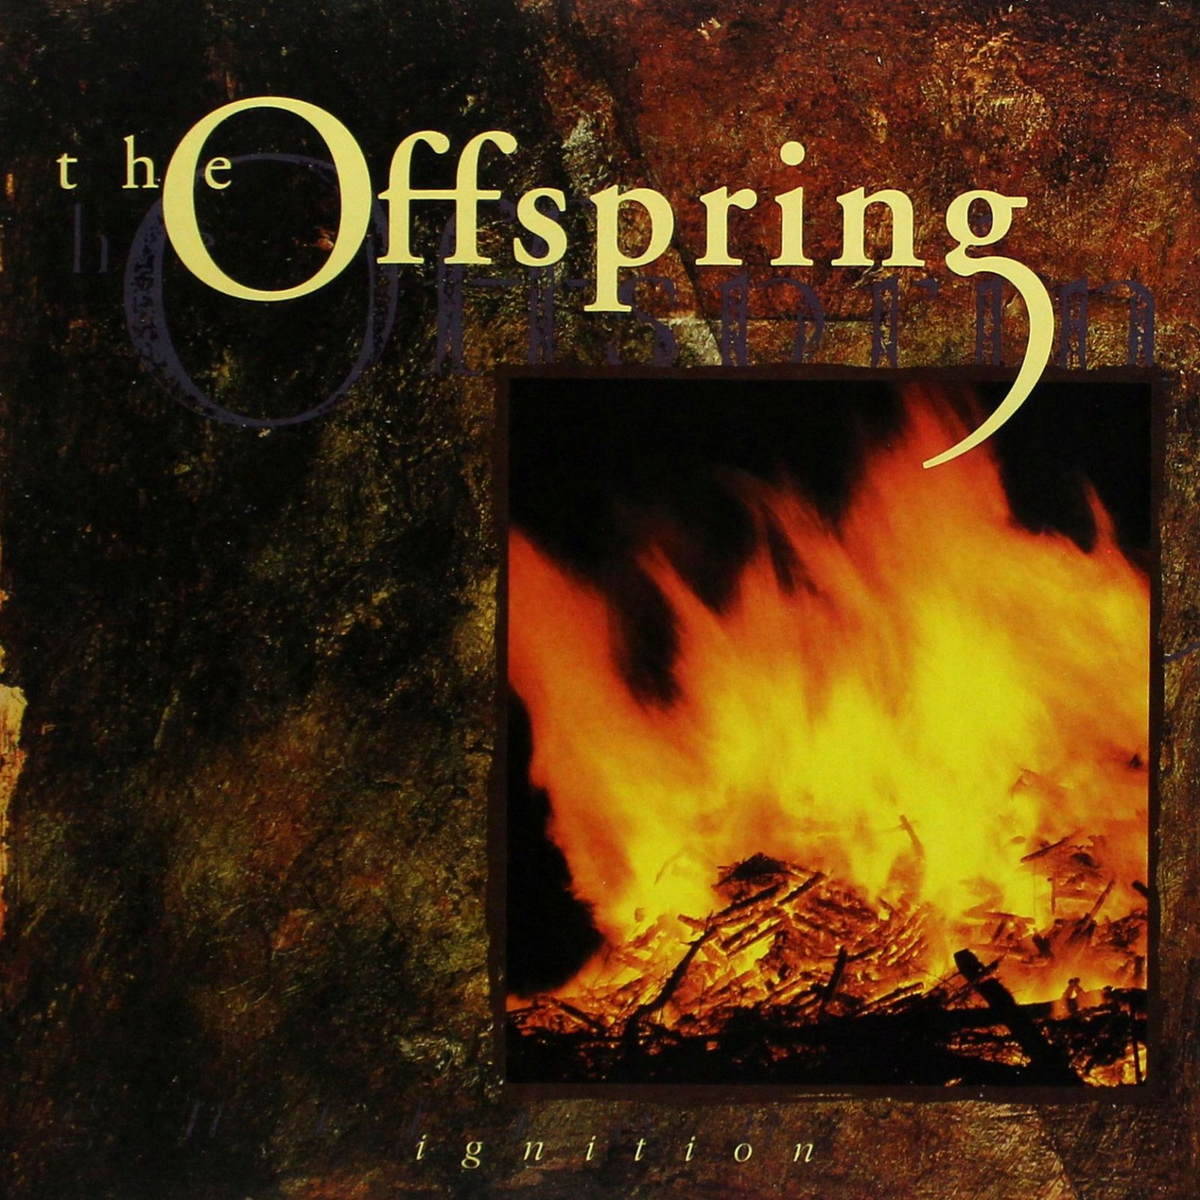 Виниловая пластинка Offspring, The, Ignition (8714092686715) виниловая пластинка the offspring americana 0602577951398